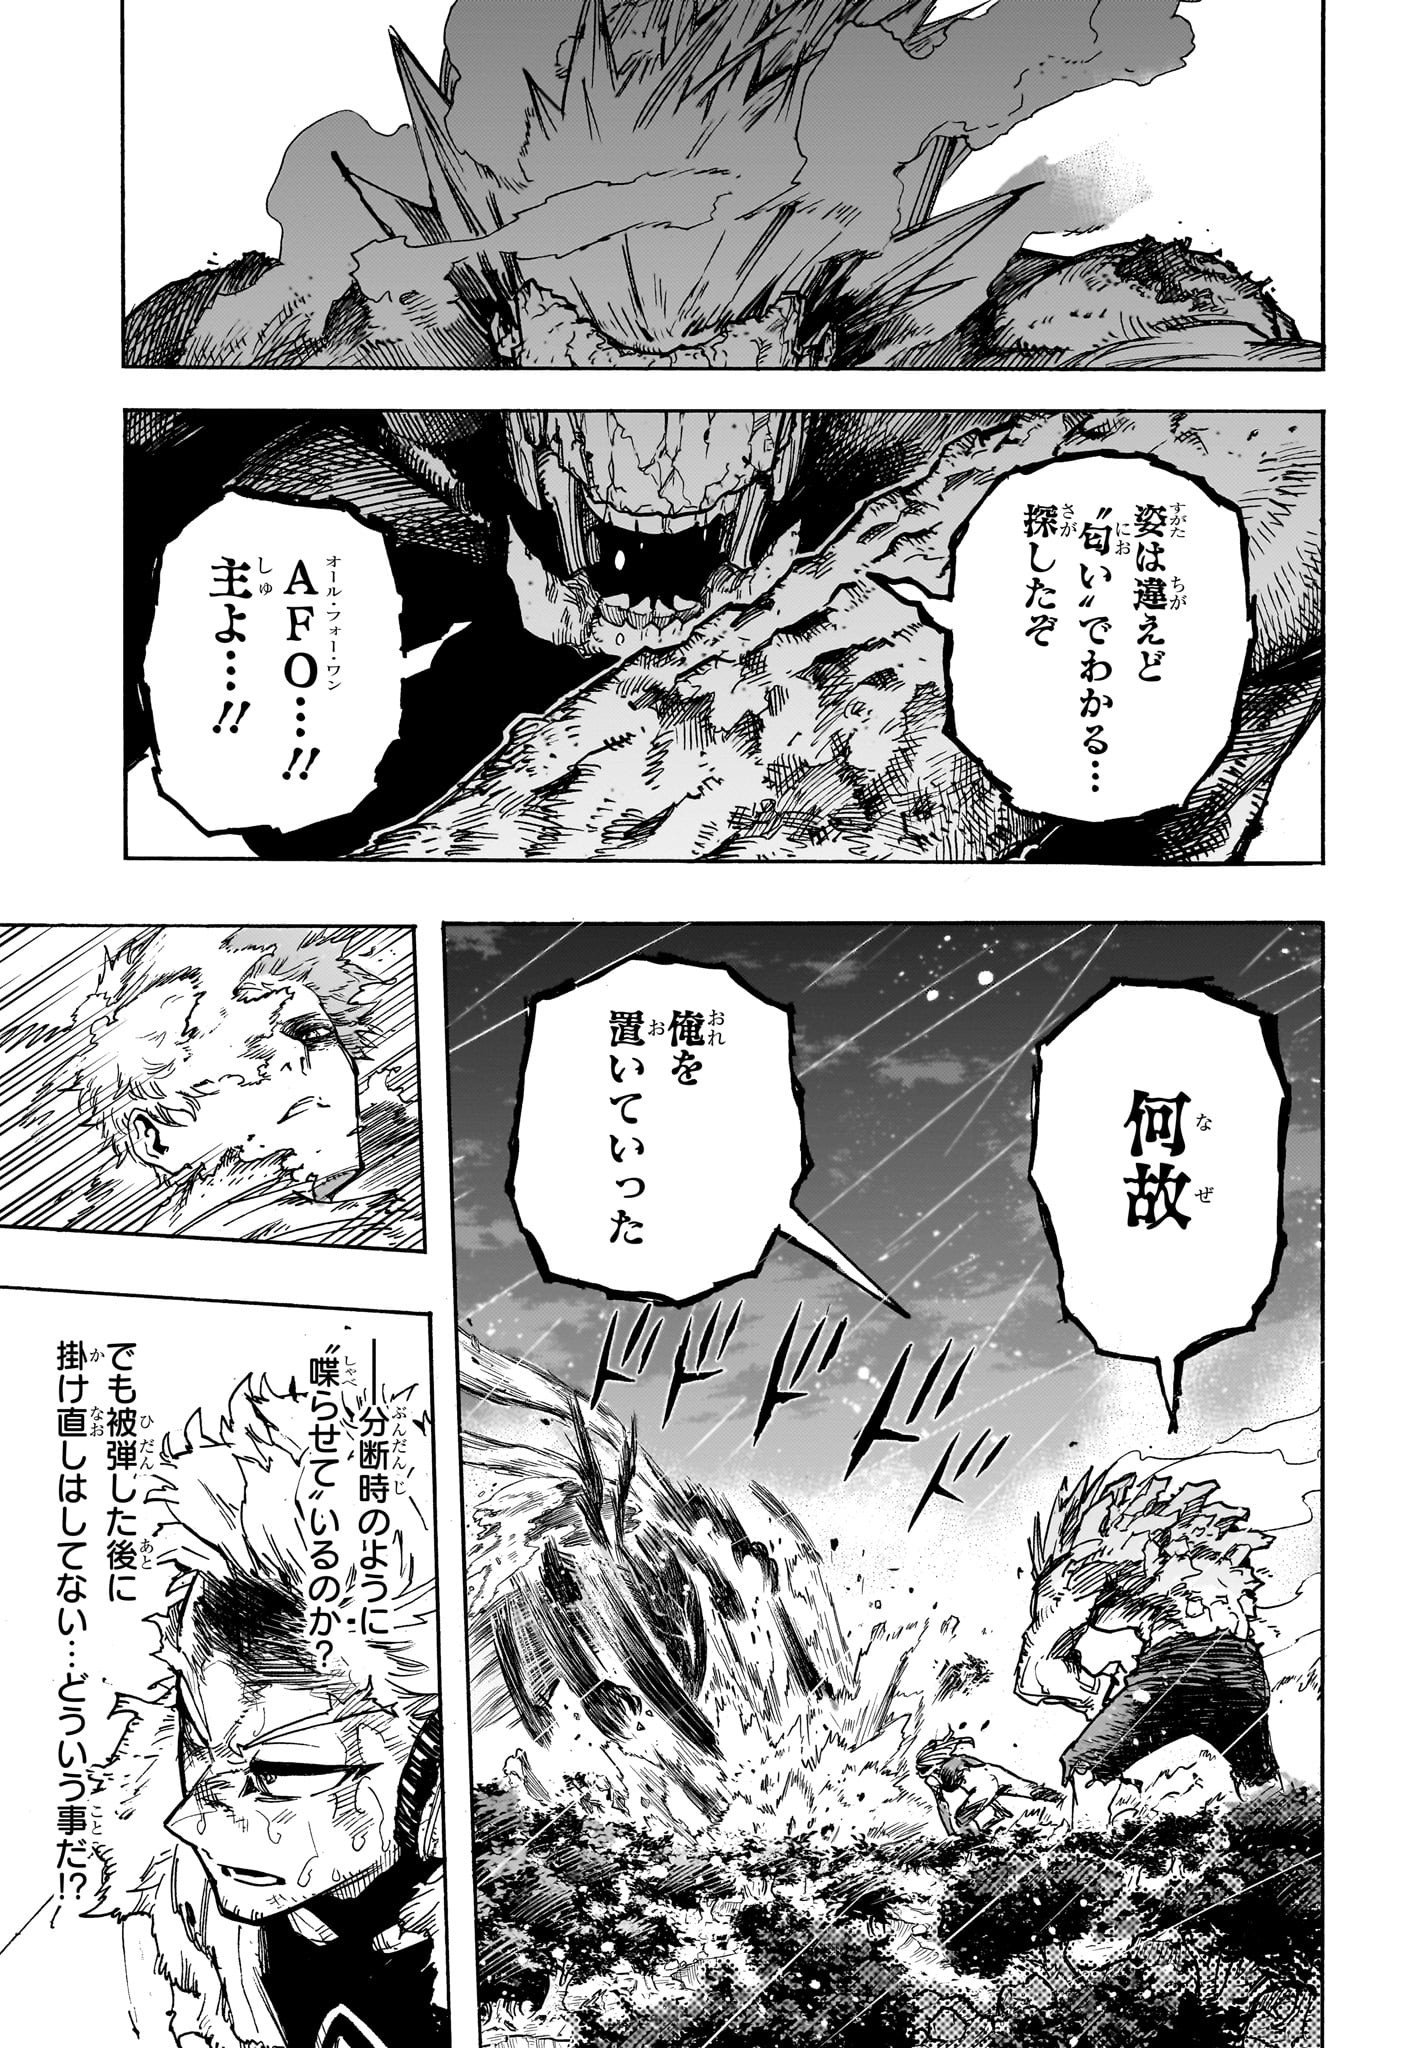 Boku no Hero Academia - Chapter 384 - Page 3